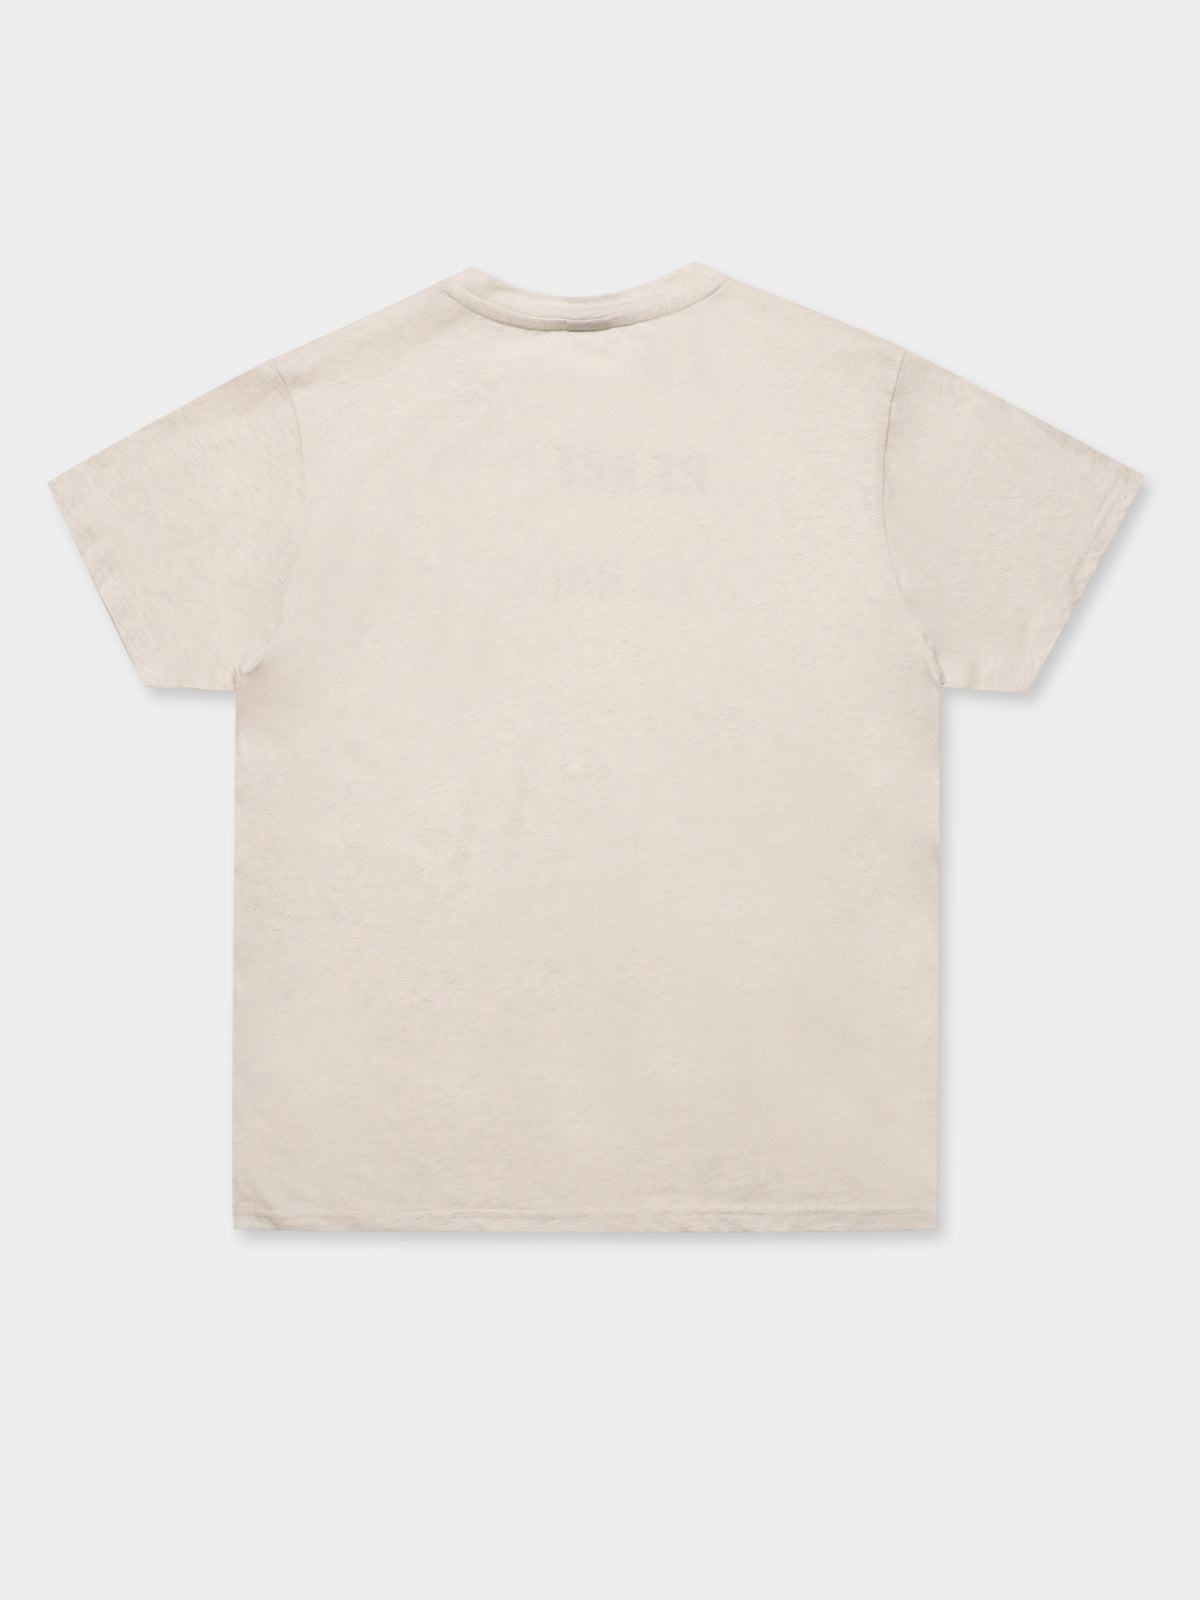 Unity T-Shirt in Grey Marle